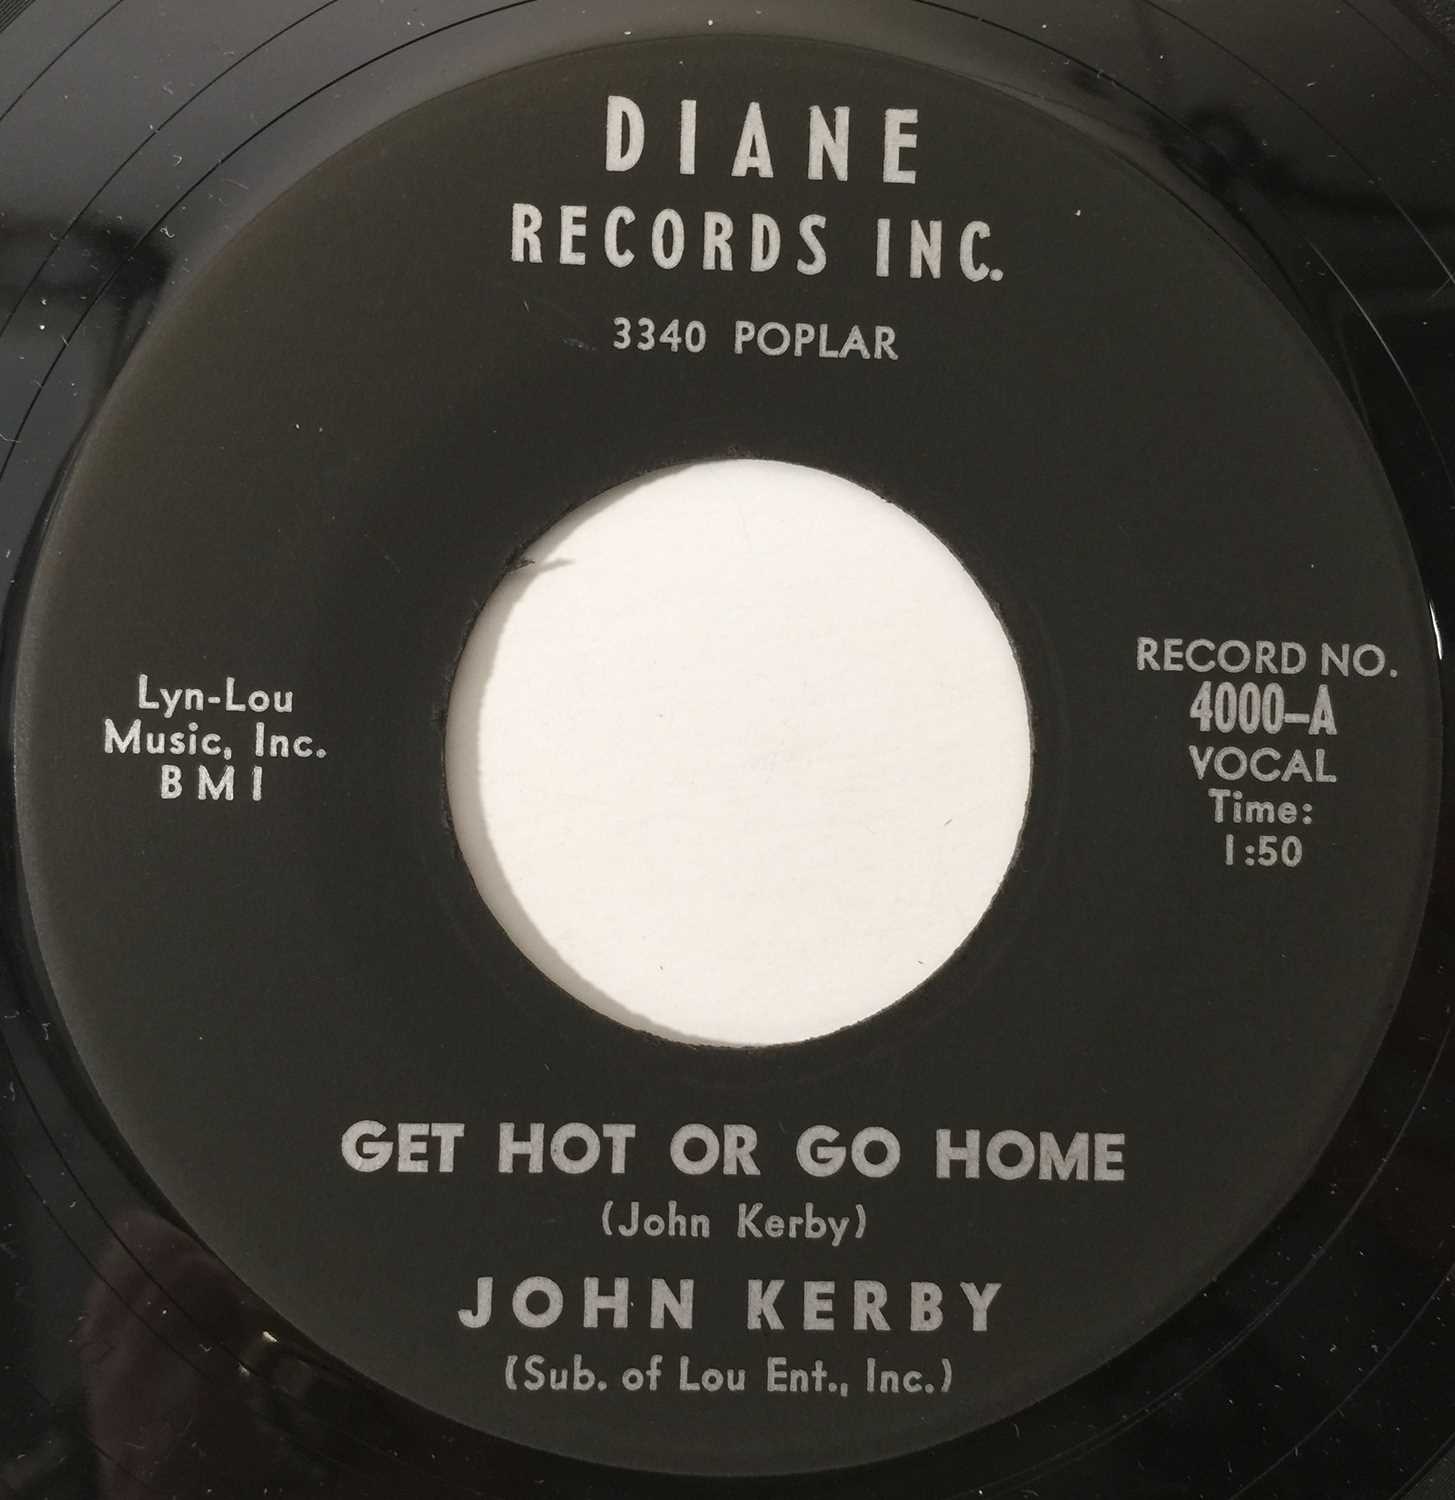 Lot 28 - JOHN KERBY - GET HOT OR GO HOME 7" (US ROCKABILLY - DIANE 4000)